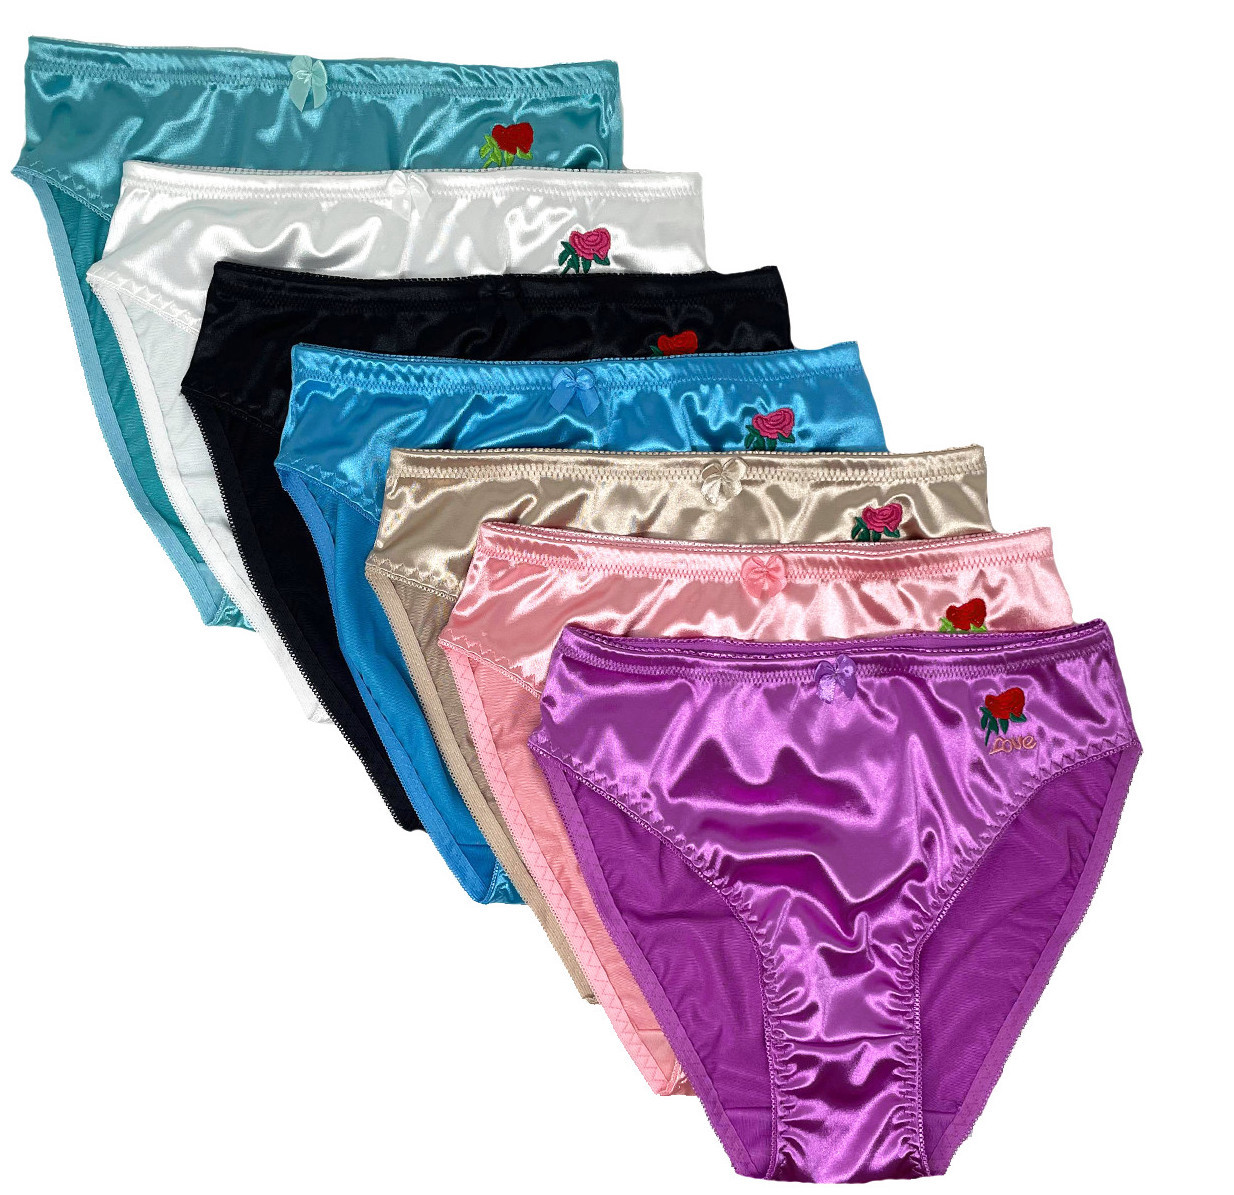 6 PRETTY SATIN BIKINIS Style PANTIES Womens Underwear Love Rose #3123 S M L XXL